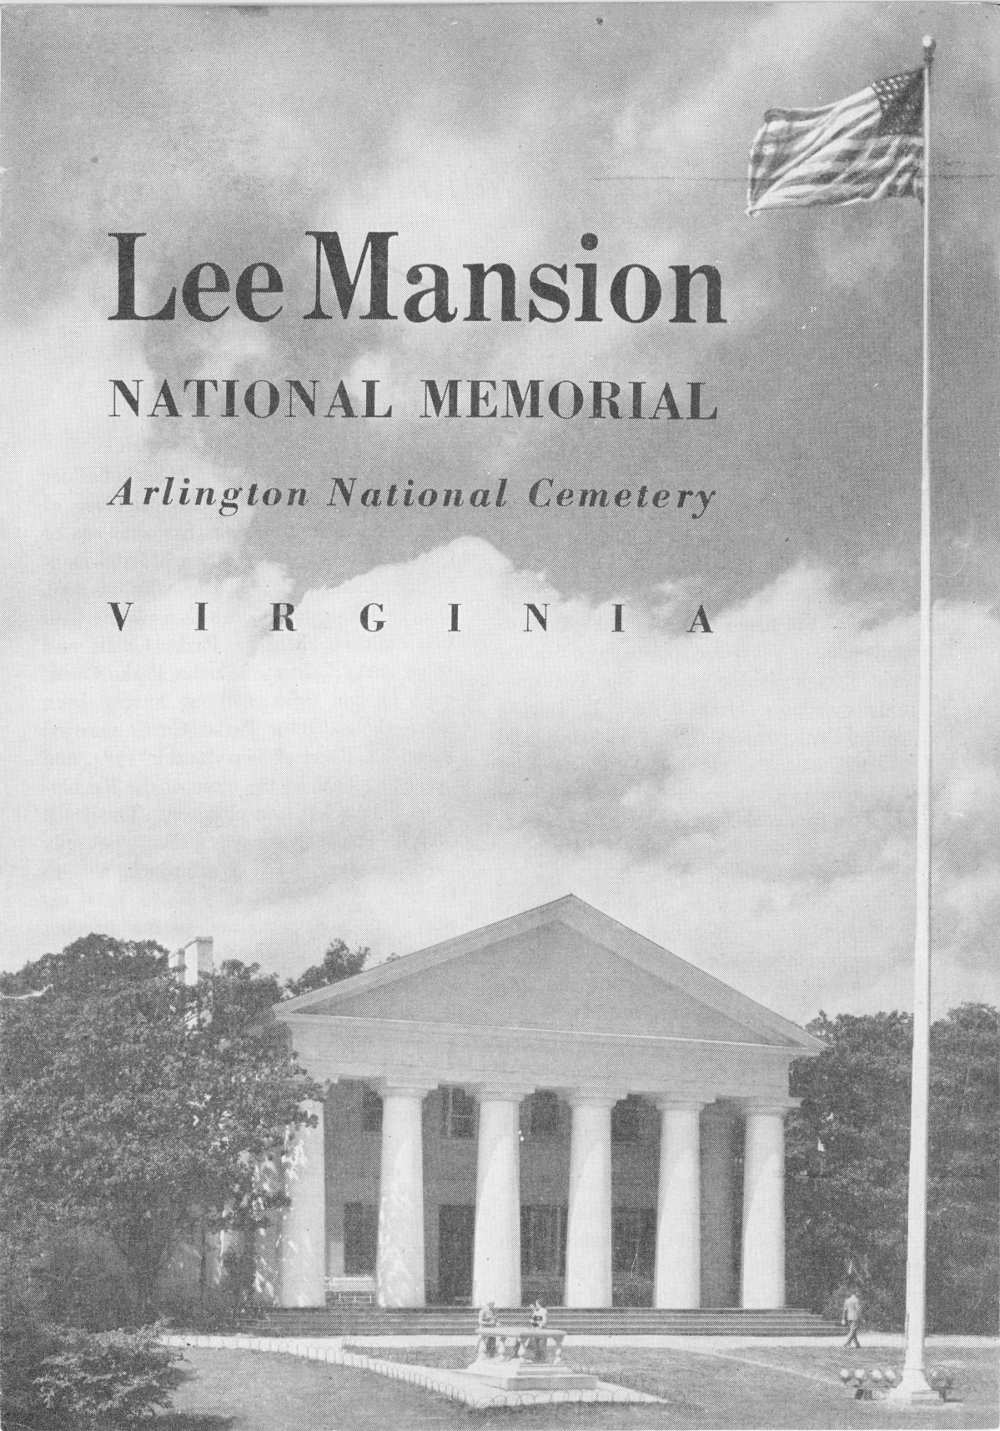 Lee Mansion National Memorial, Arlington National Cemetery